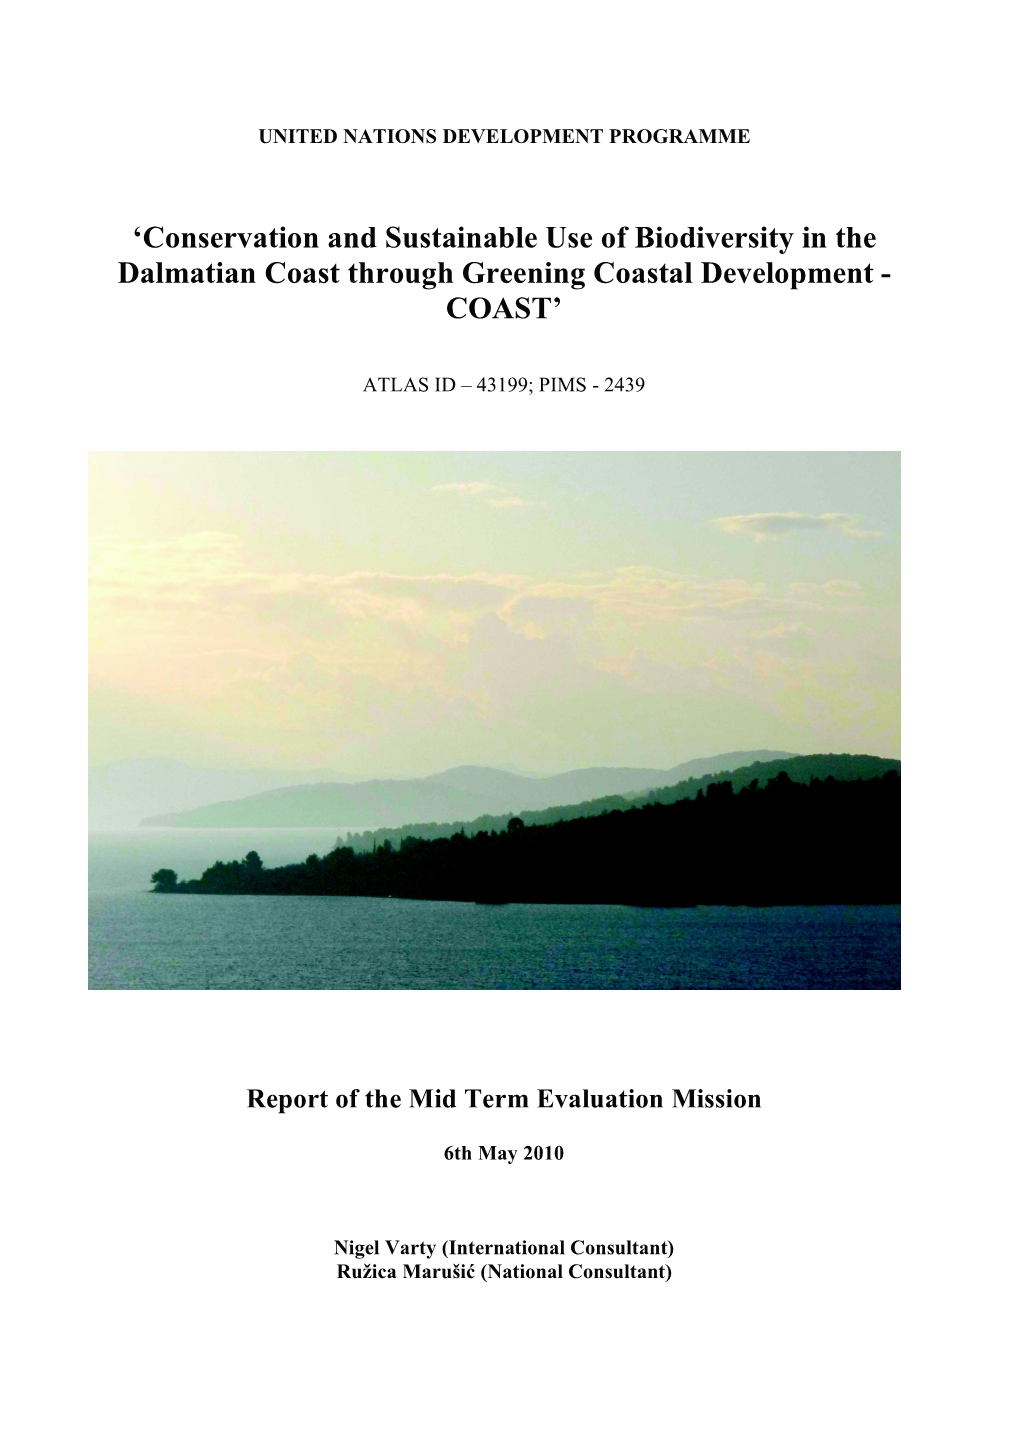 Conservation and Sustainable Use of Biodiversity in the Dalmatian Coast Through Greening Coastal Development - COAST’